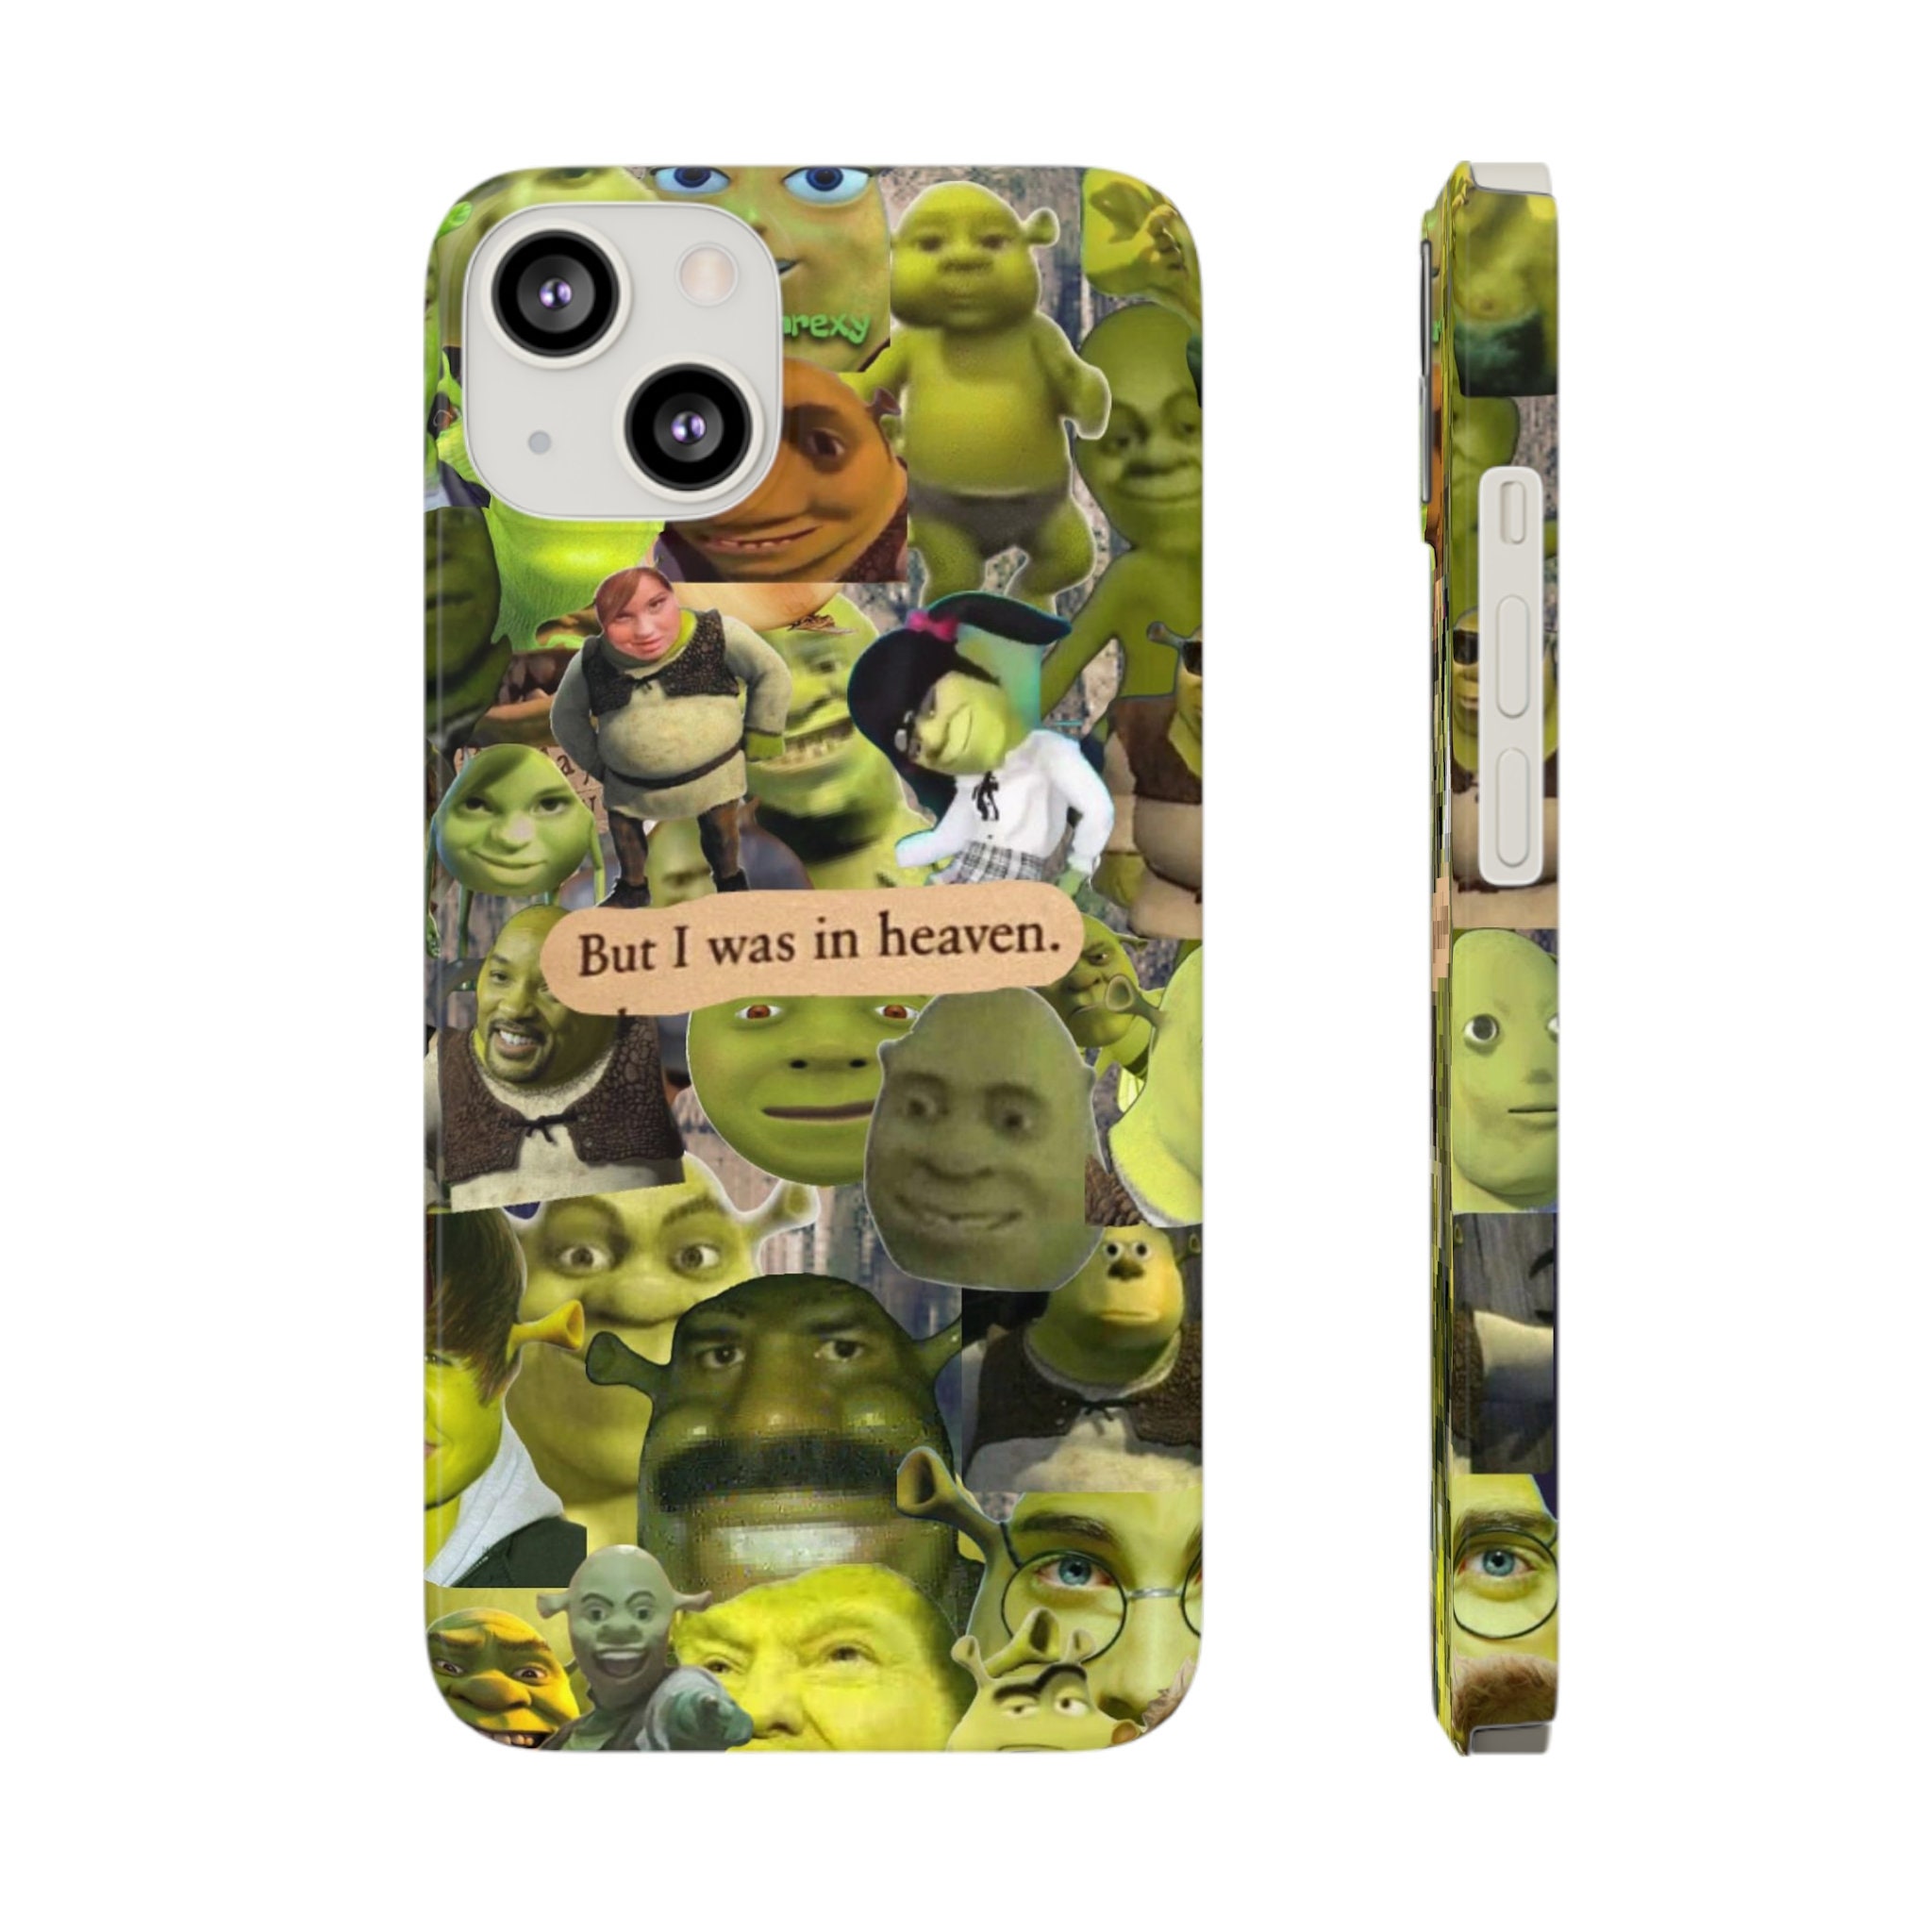 Shrek on the Croc | iPad Case & Skin